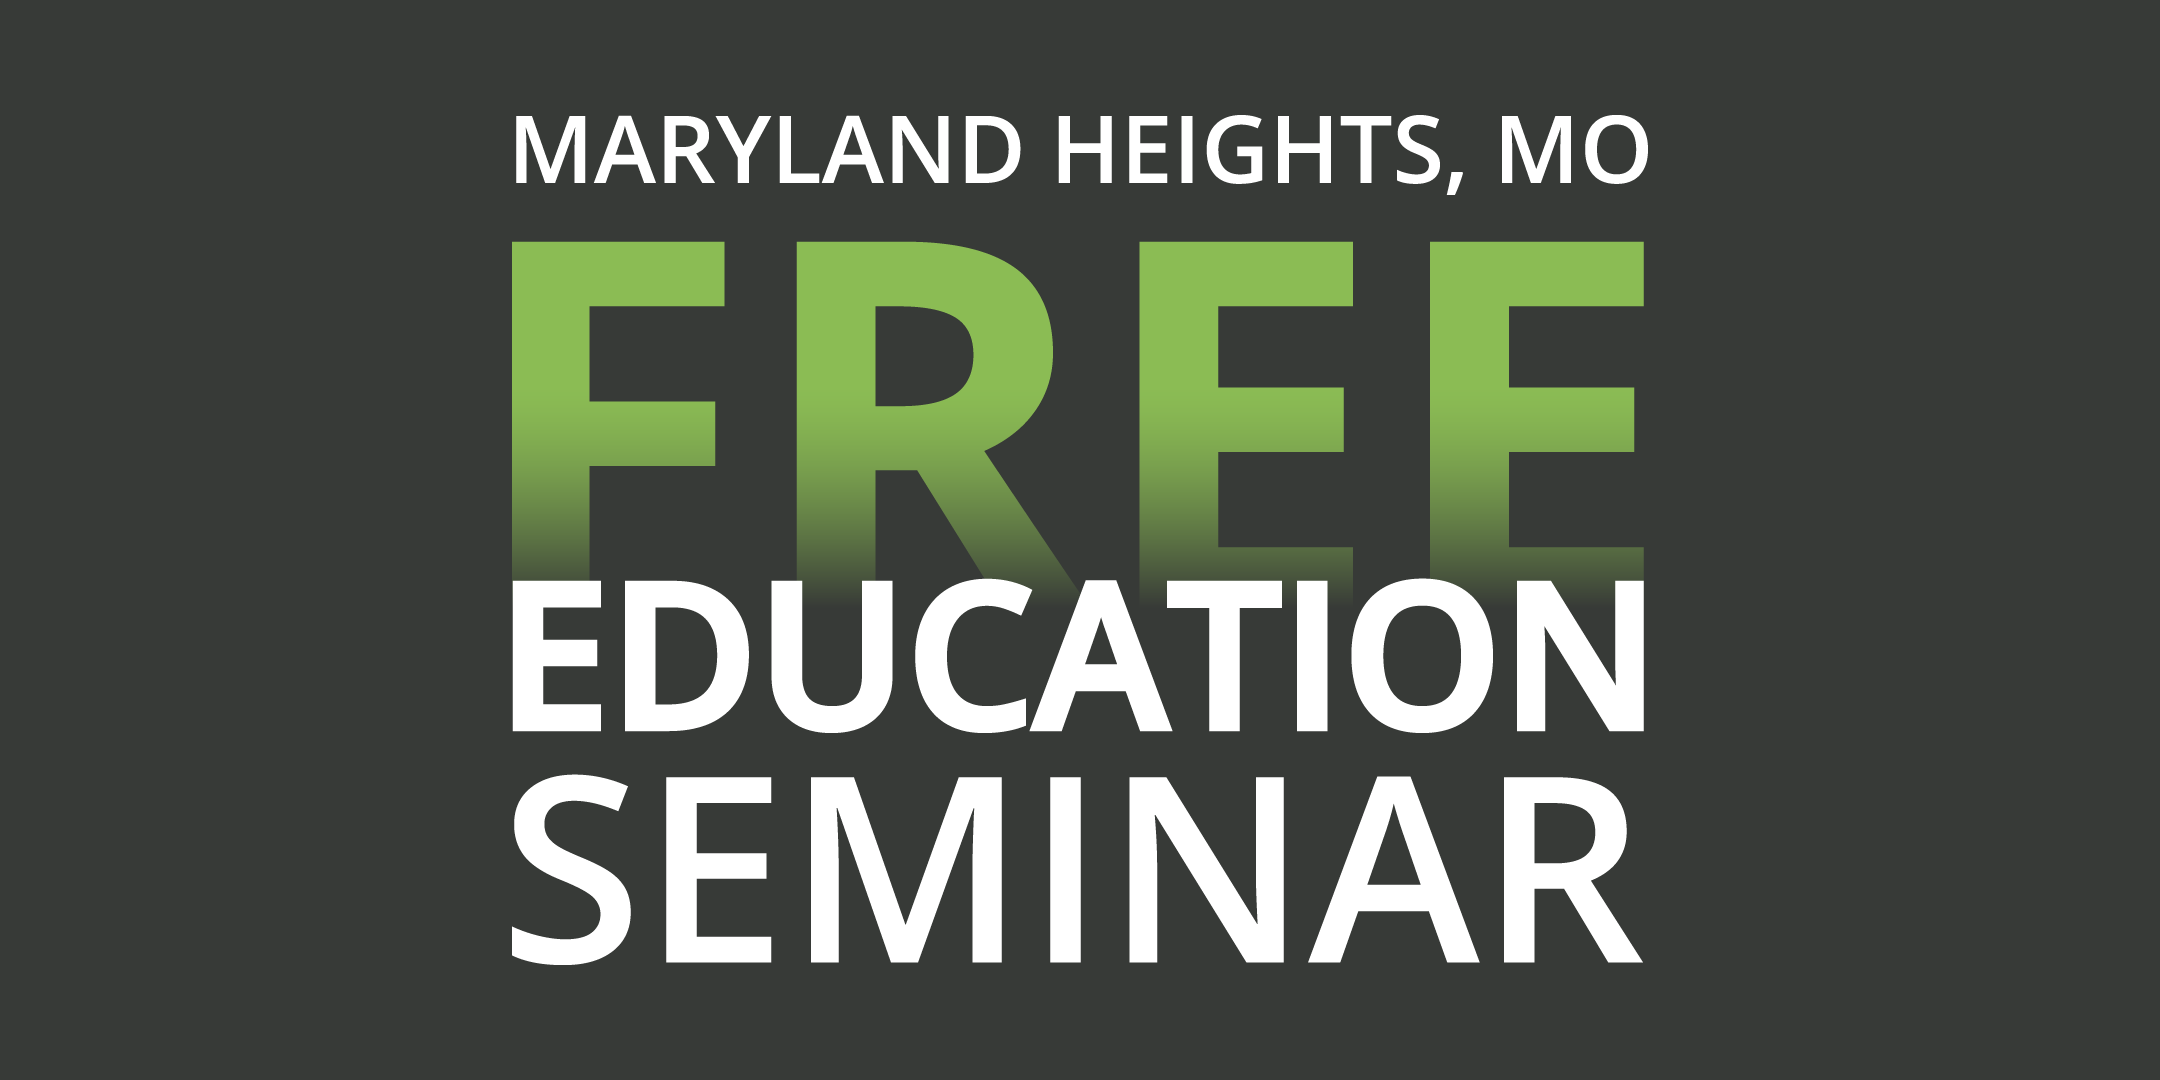 Maryland Heights Education Seminar